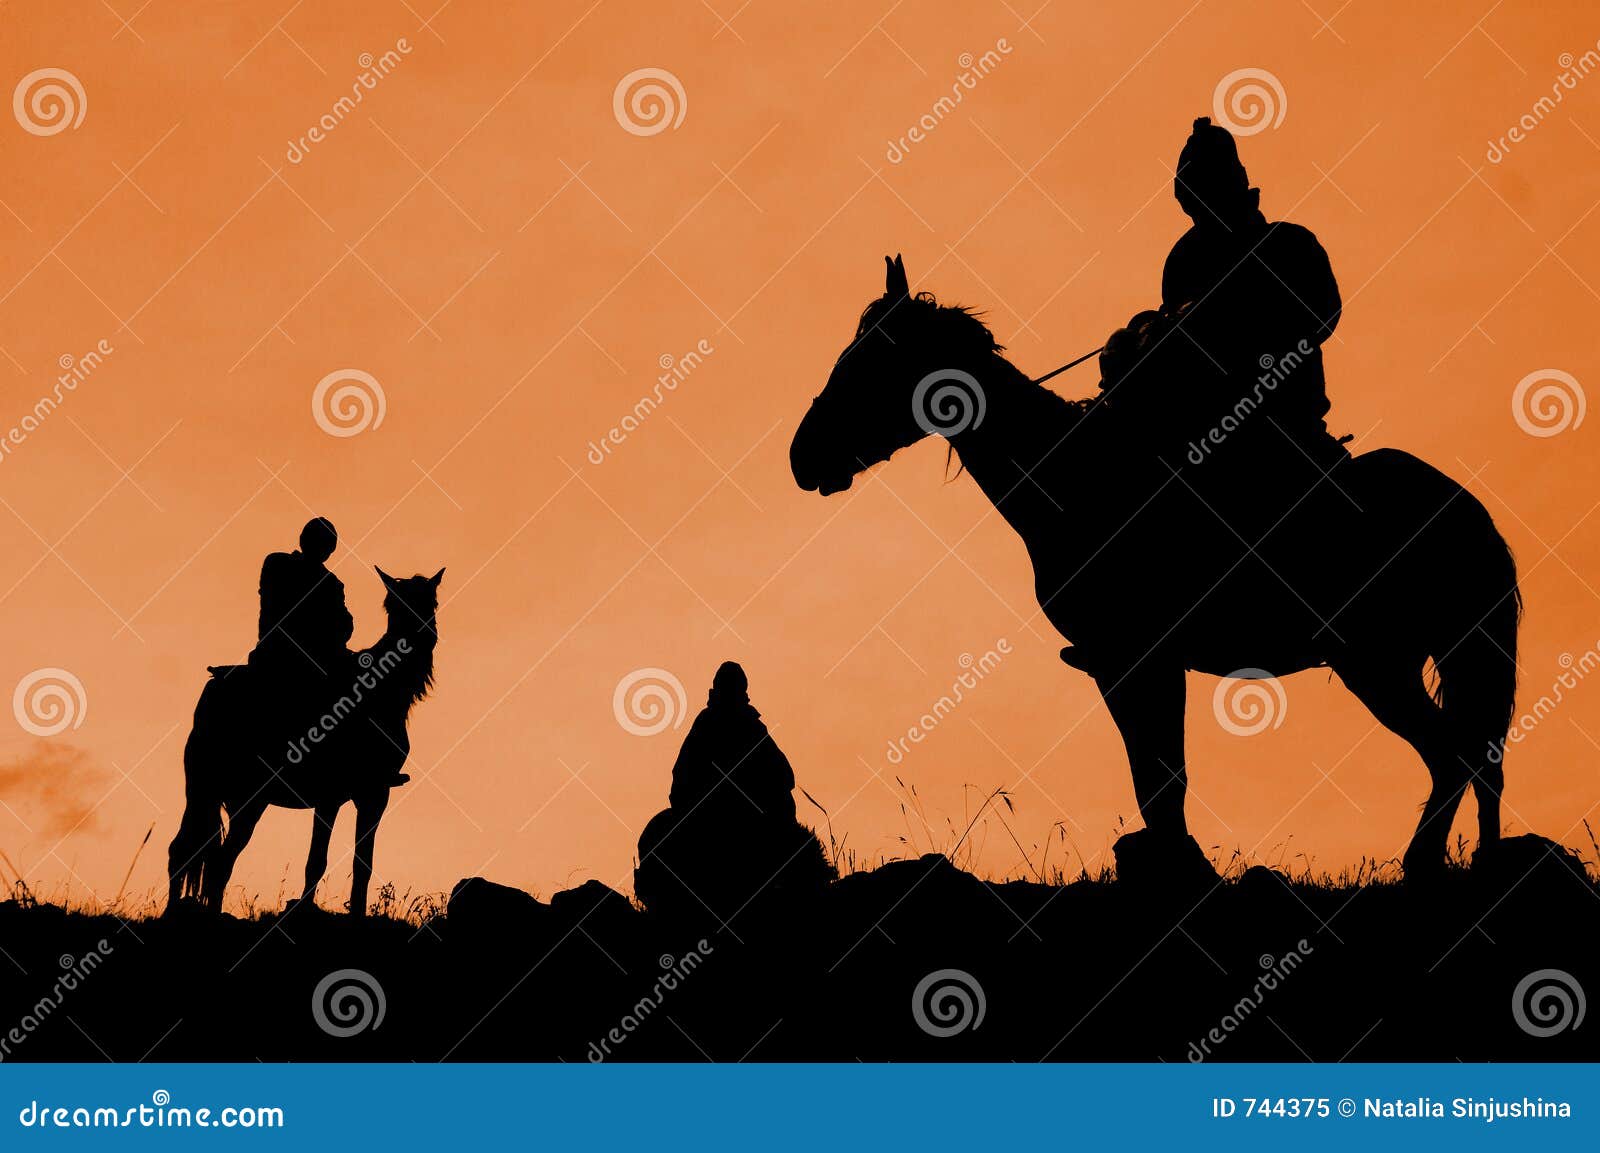 three riders, kyrgyzstan